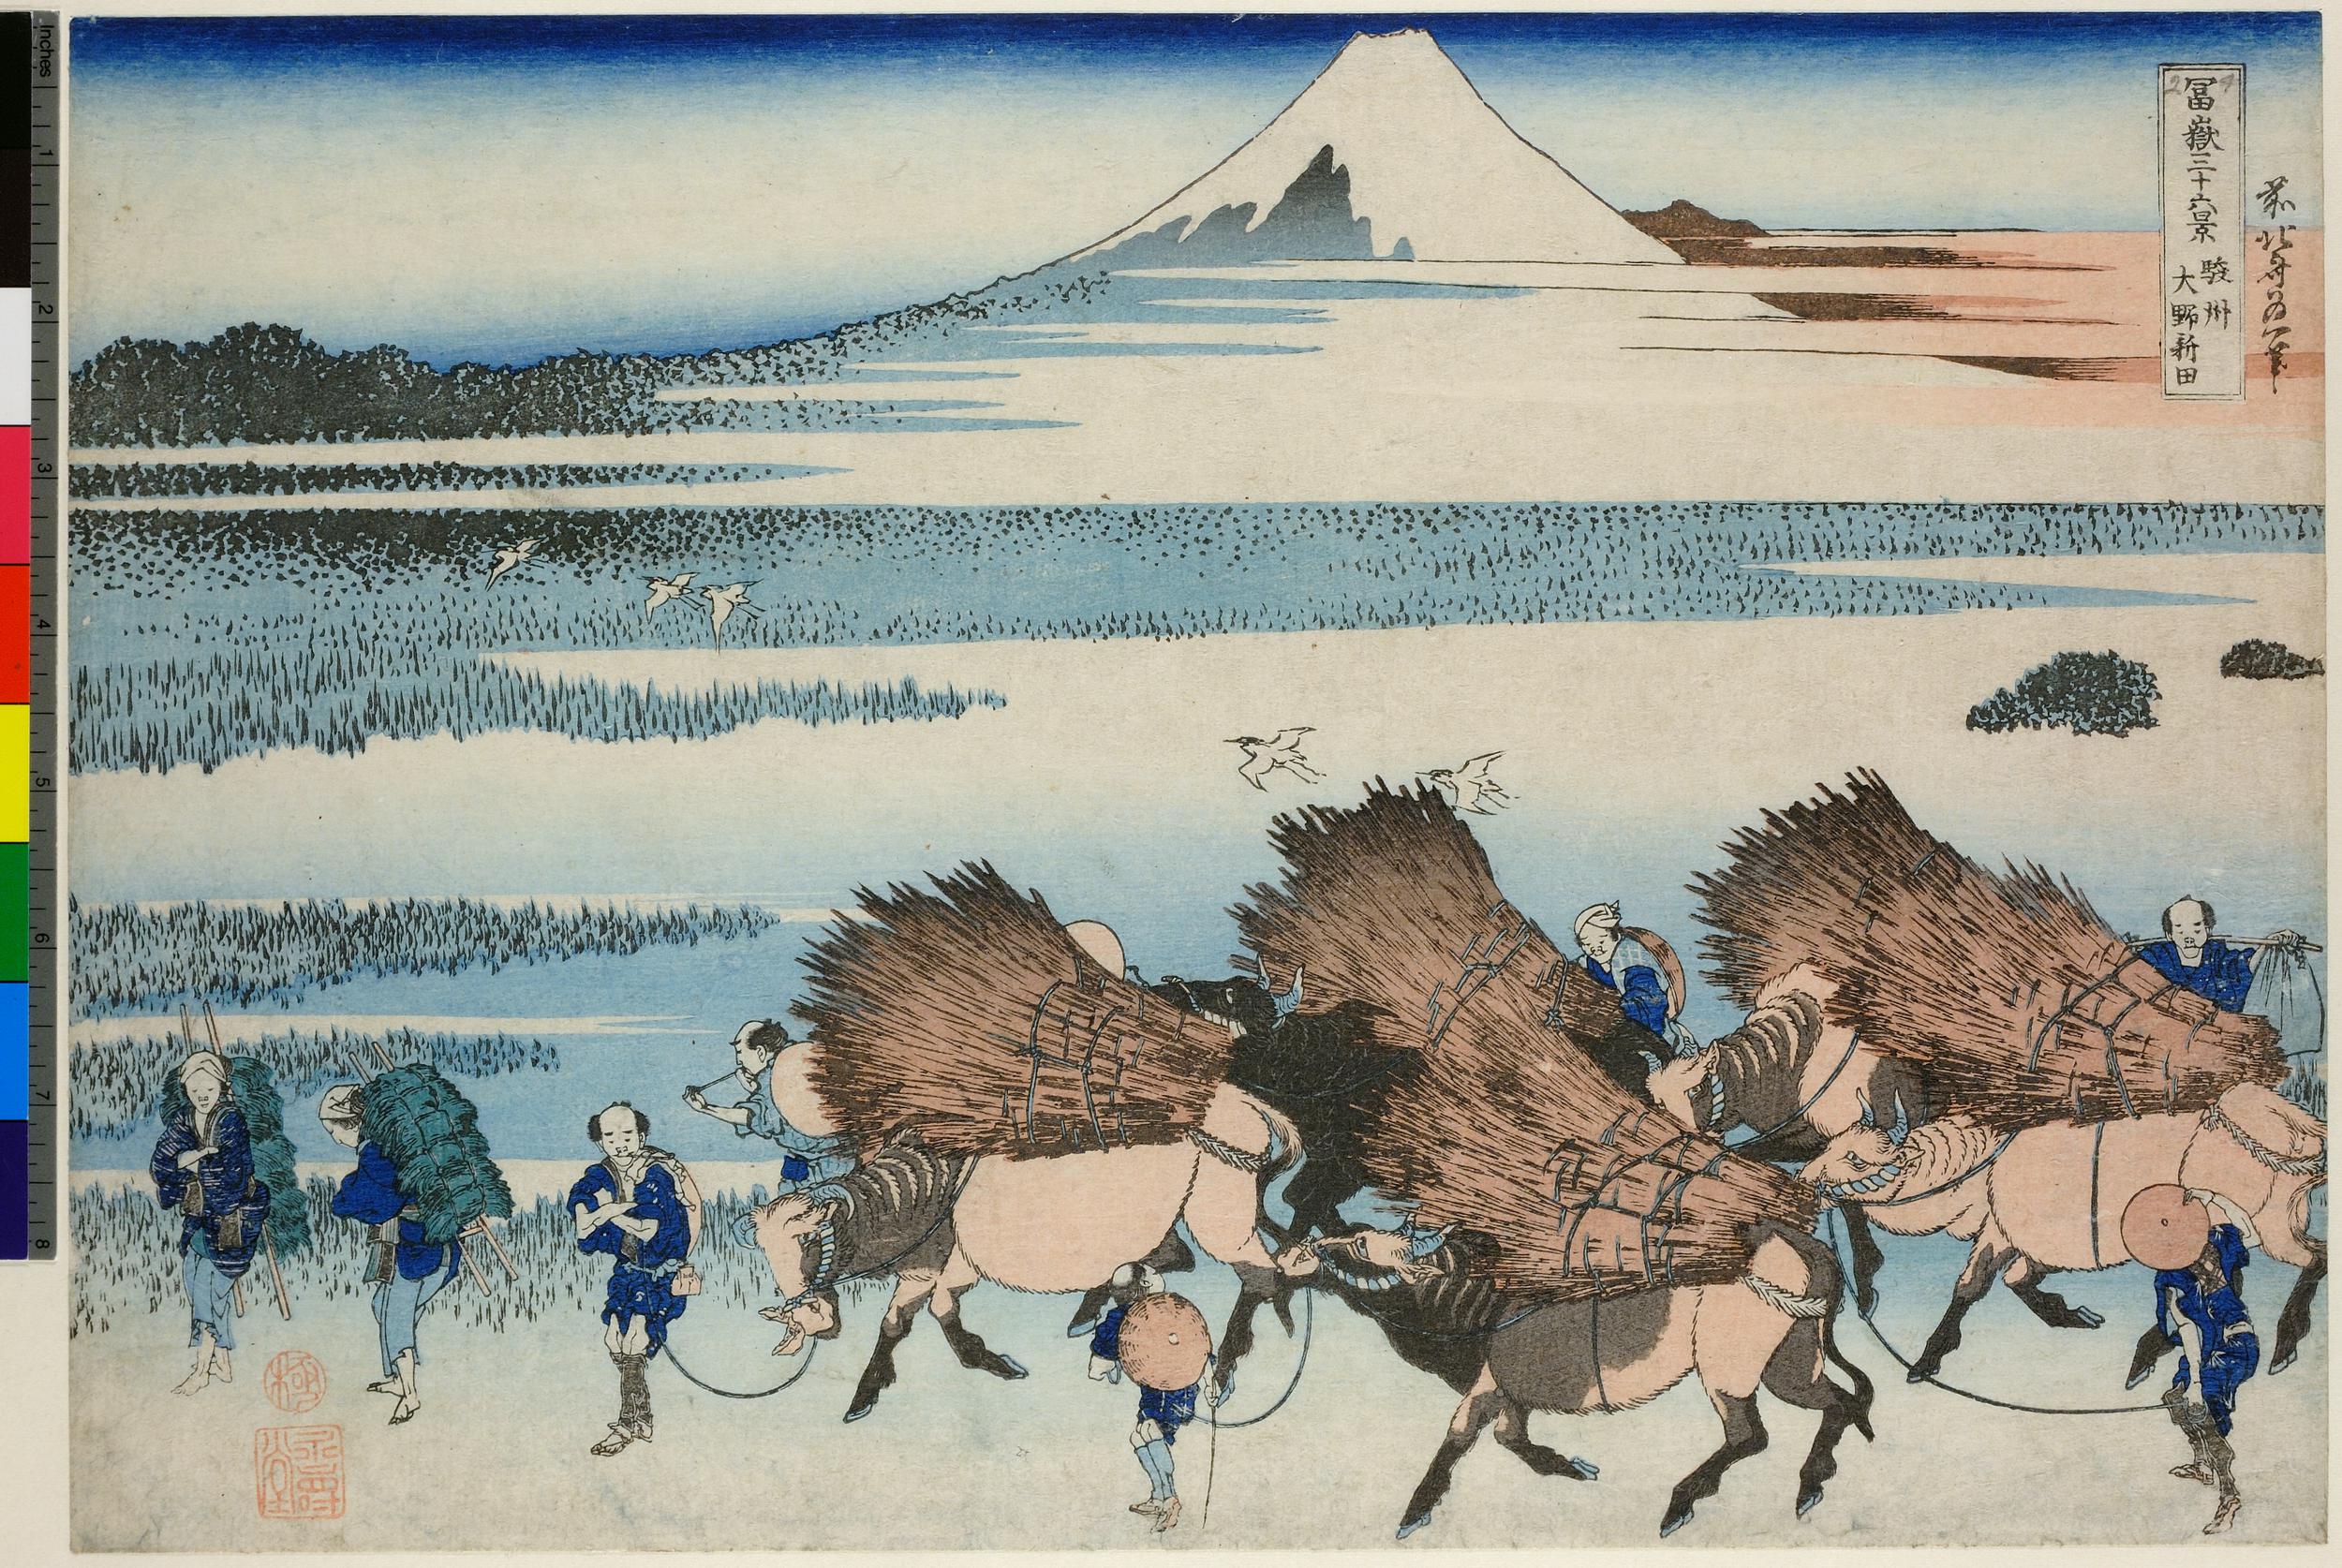 Katsushika Hokusai. The New Fields at Ōno in Suruga Province, from the series Thirty-six Views of Mount Fuji